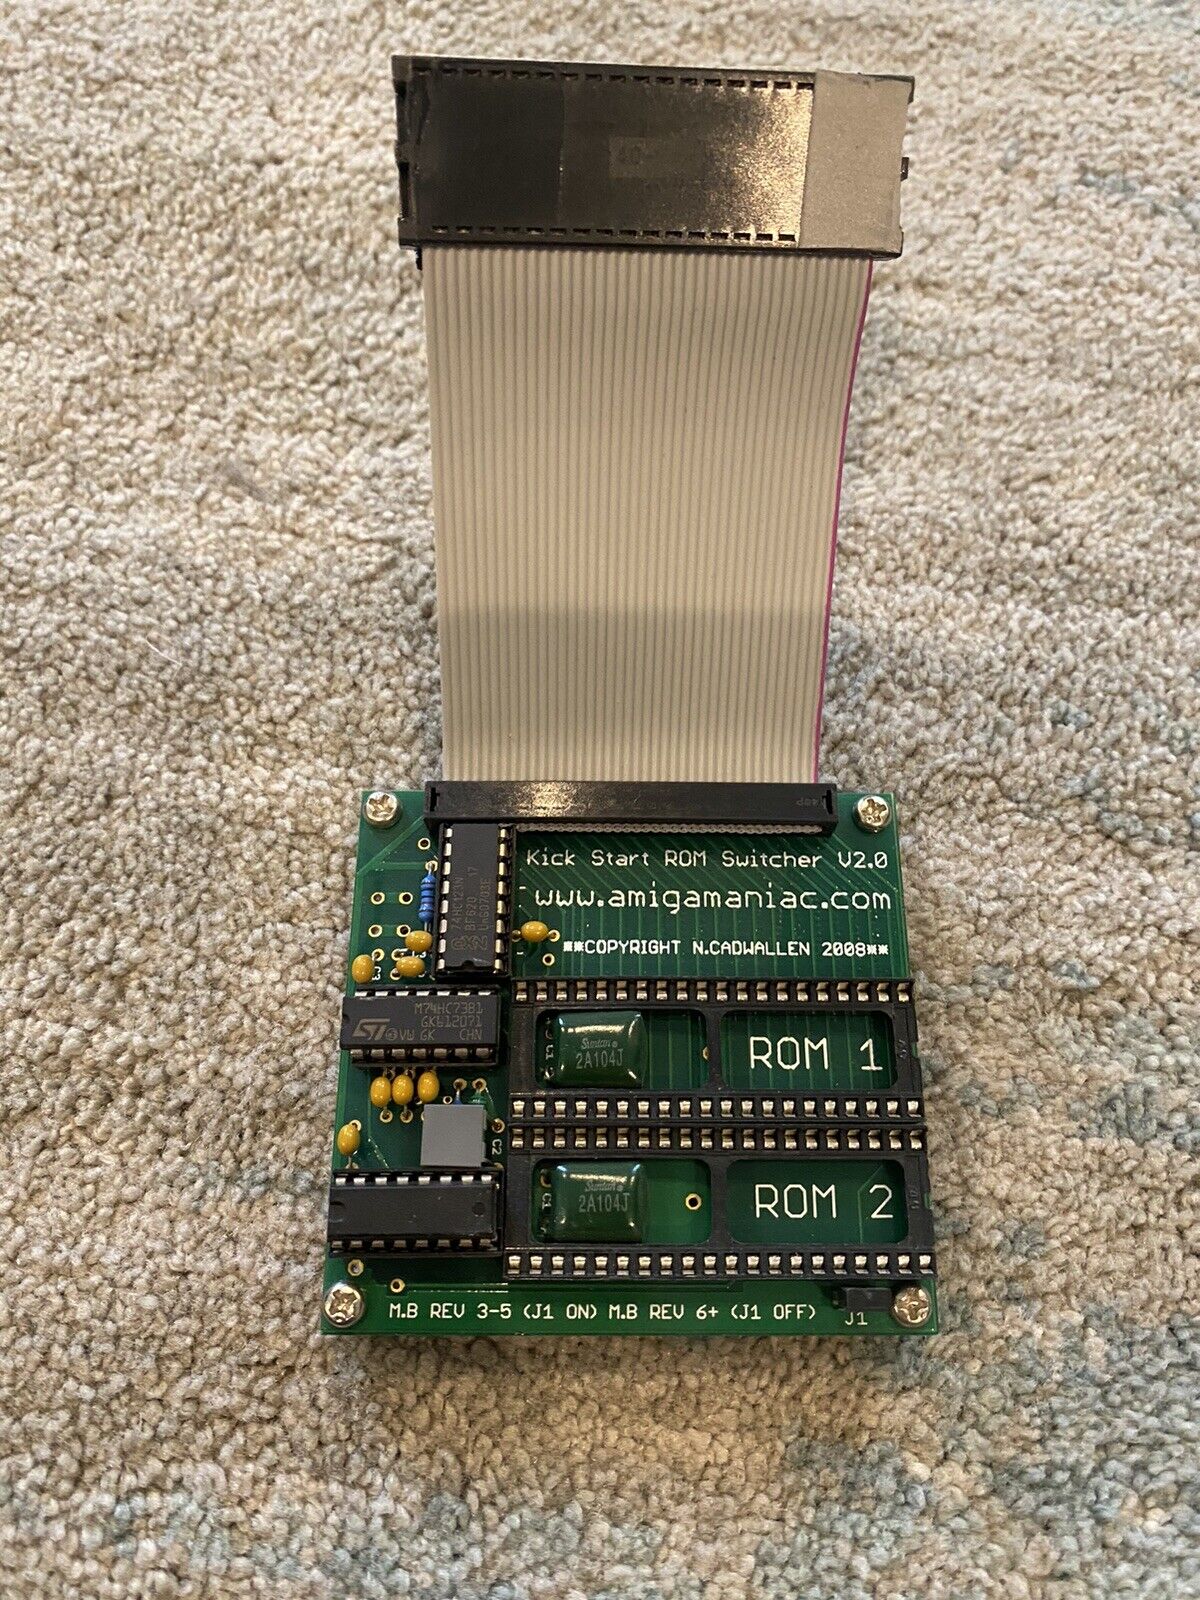 New Dual Double Kickstart ROM Switcher Selector for Amiga 500 600 2000 1110 v2.0